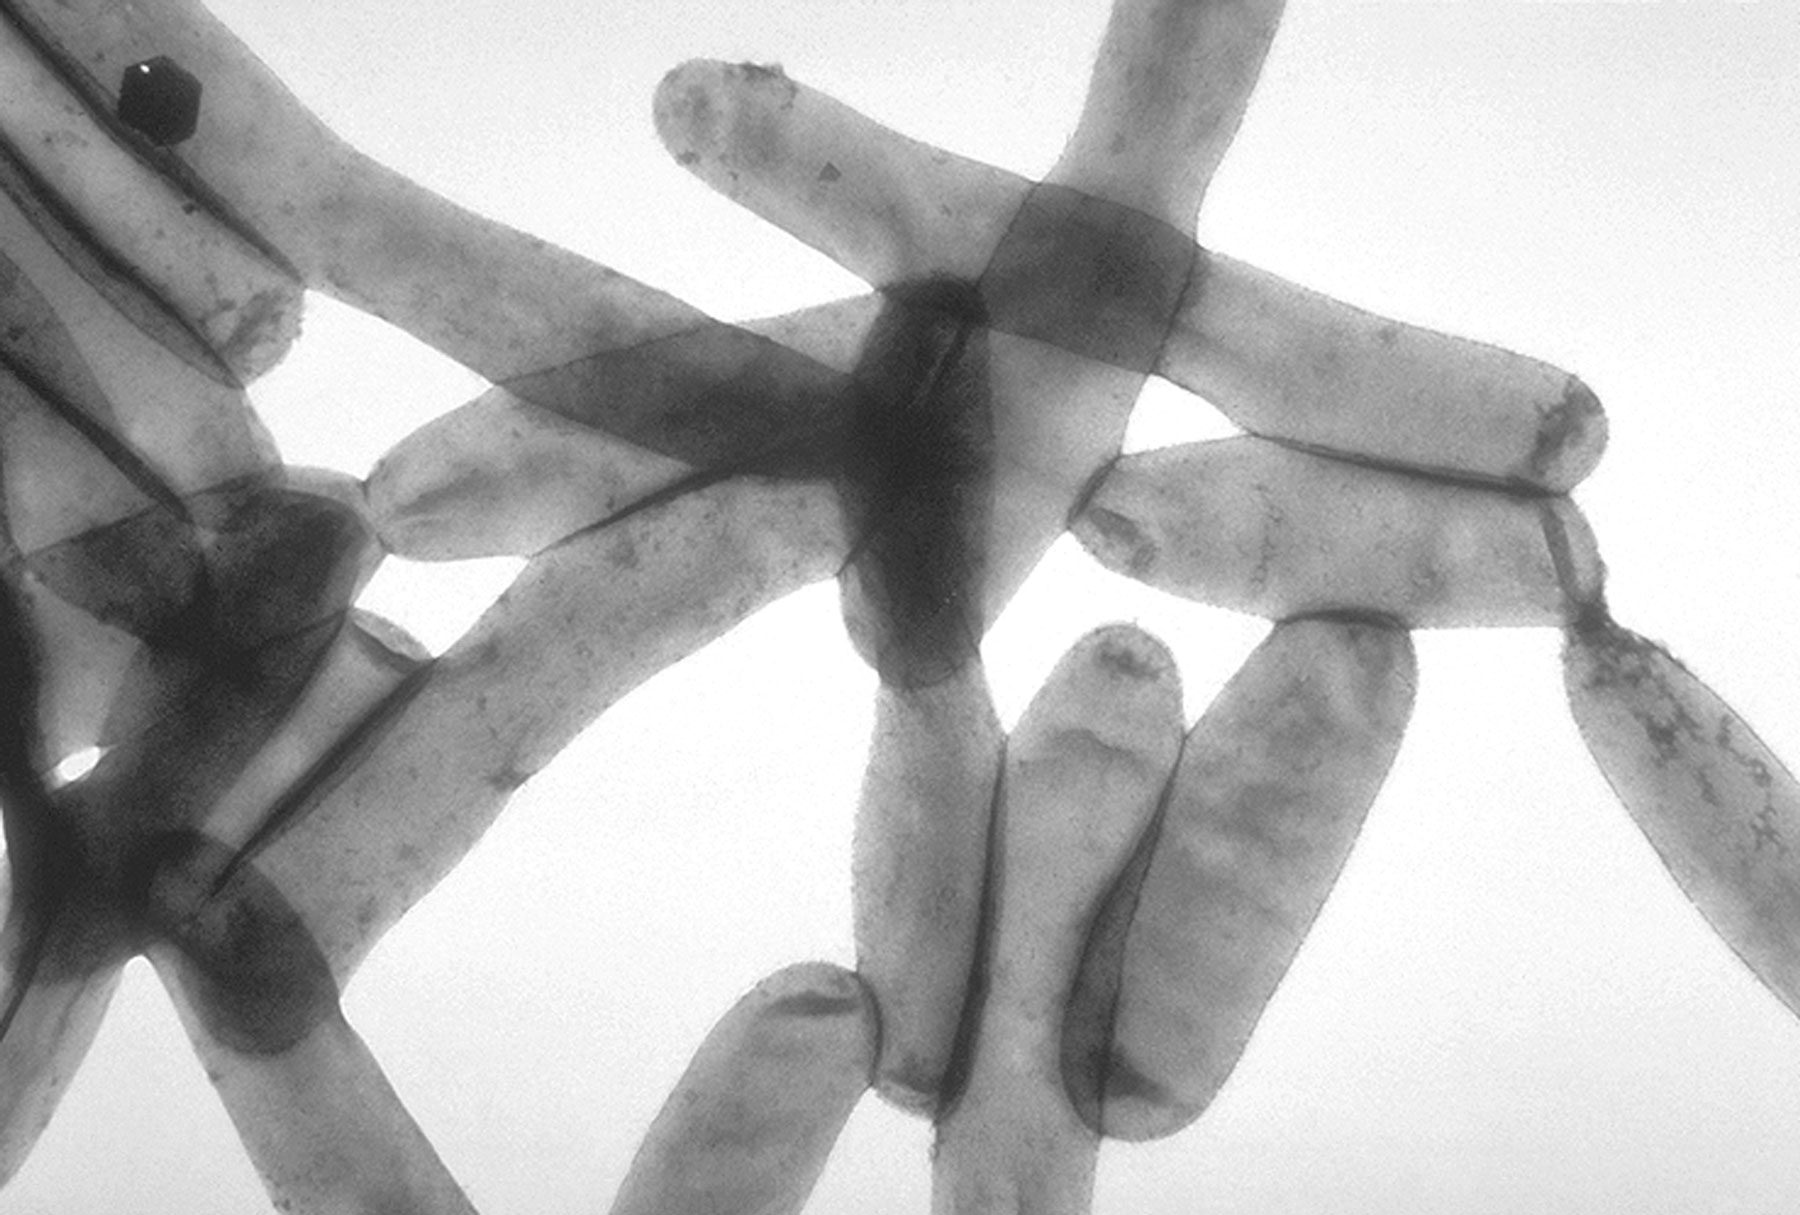 Kulovité kolonie Legionelly na agaru v Petriho misce pro vyšší kontrast pod UV zářením. Autor: CDC/James Gathany – CDC Public Health Image Library (ID#: 7925).